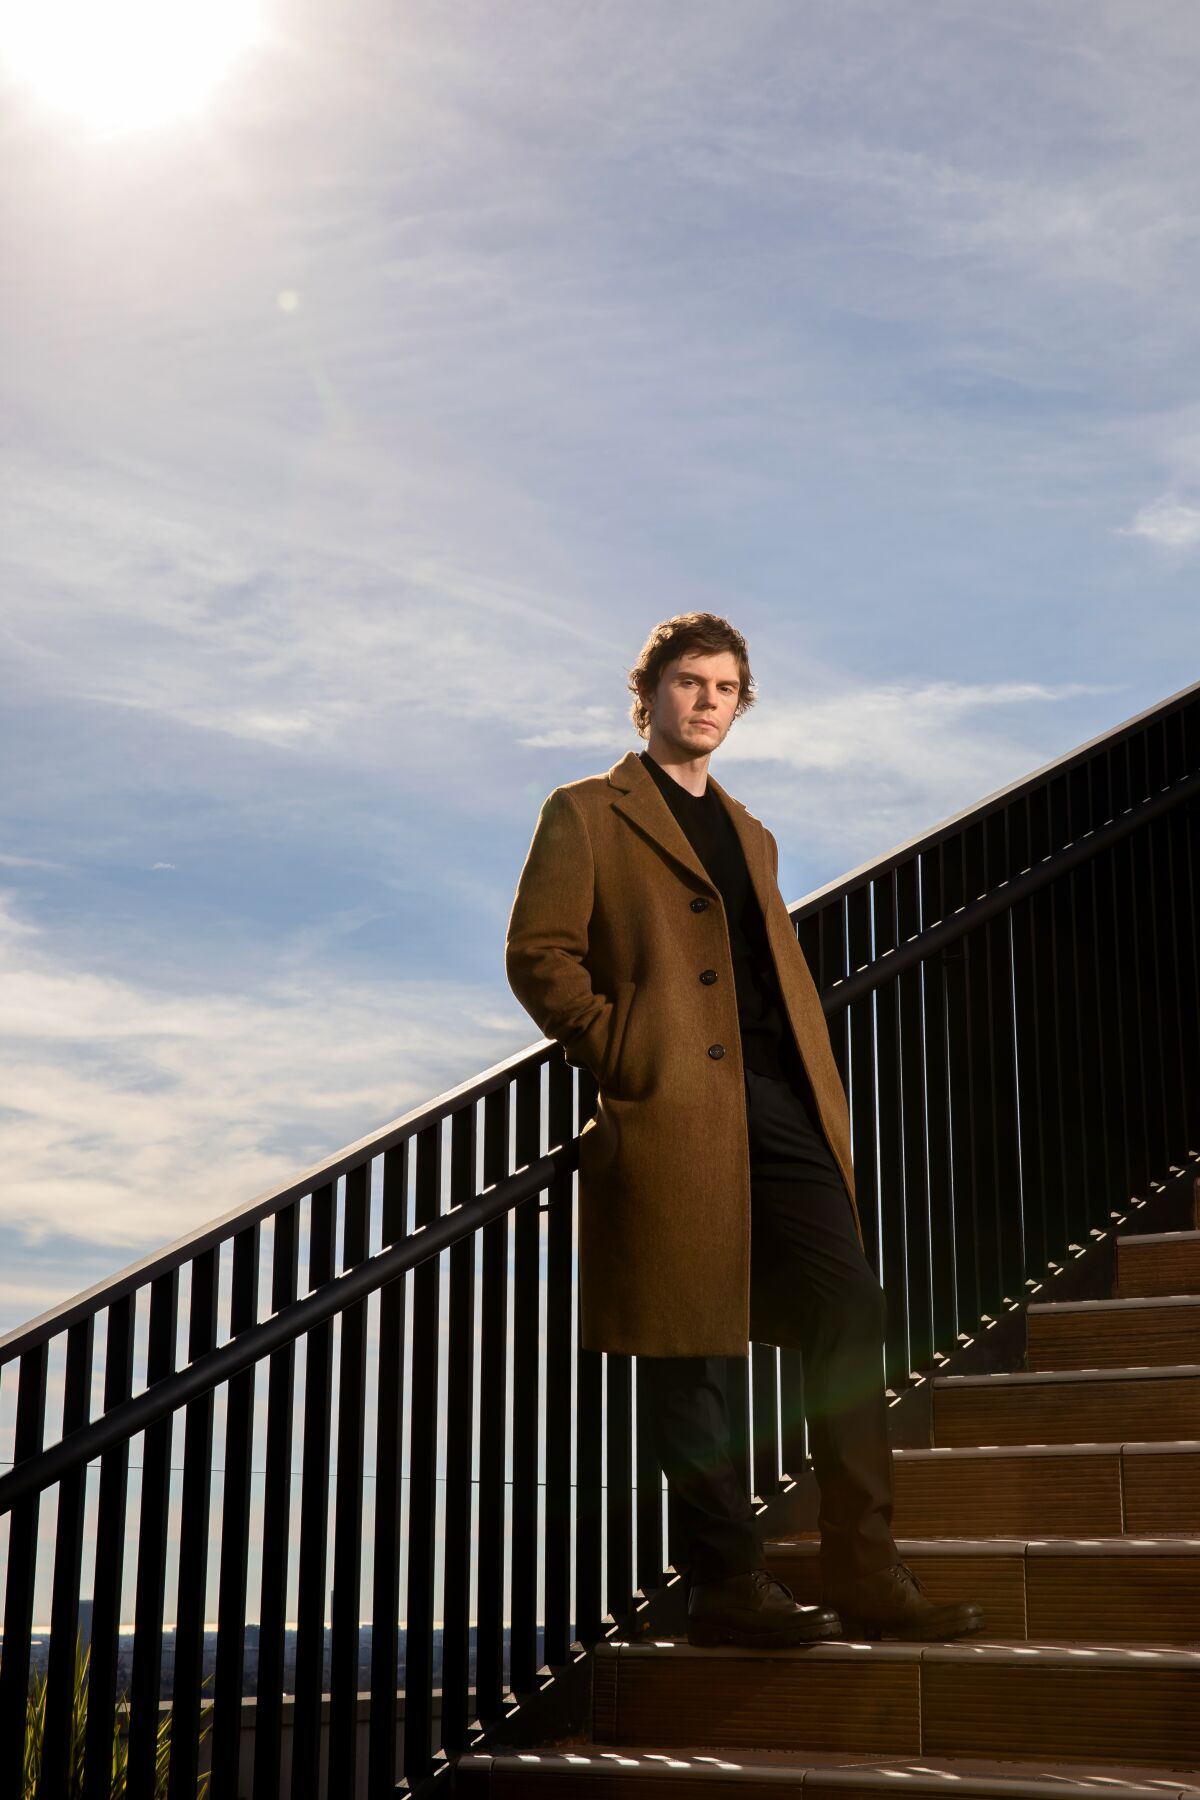 Evan Peters leans against a stairway railing against a cloudy blue sky.